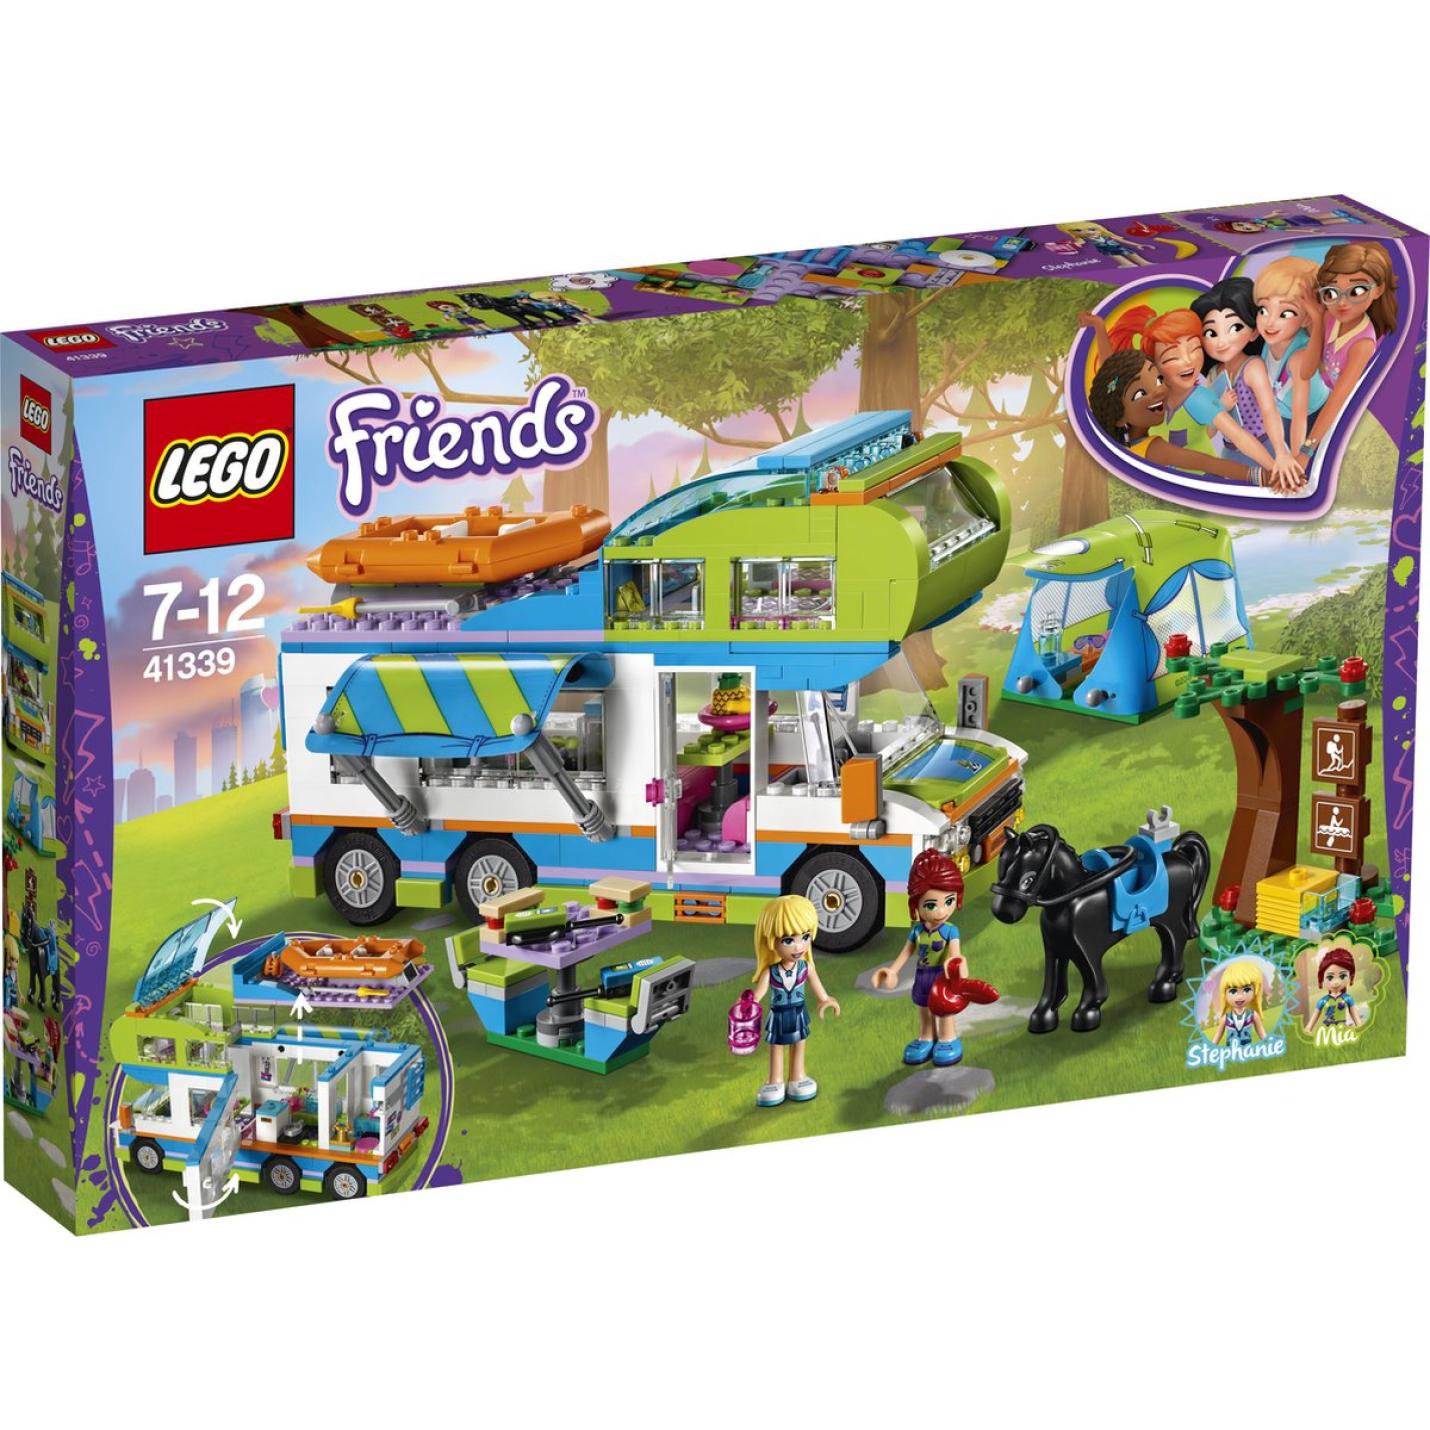 LEGO Friends Mia's Camper - 41339 2